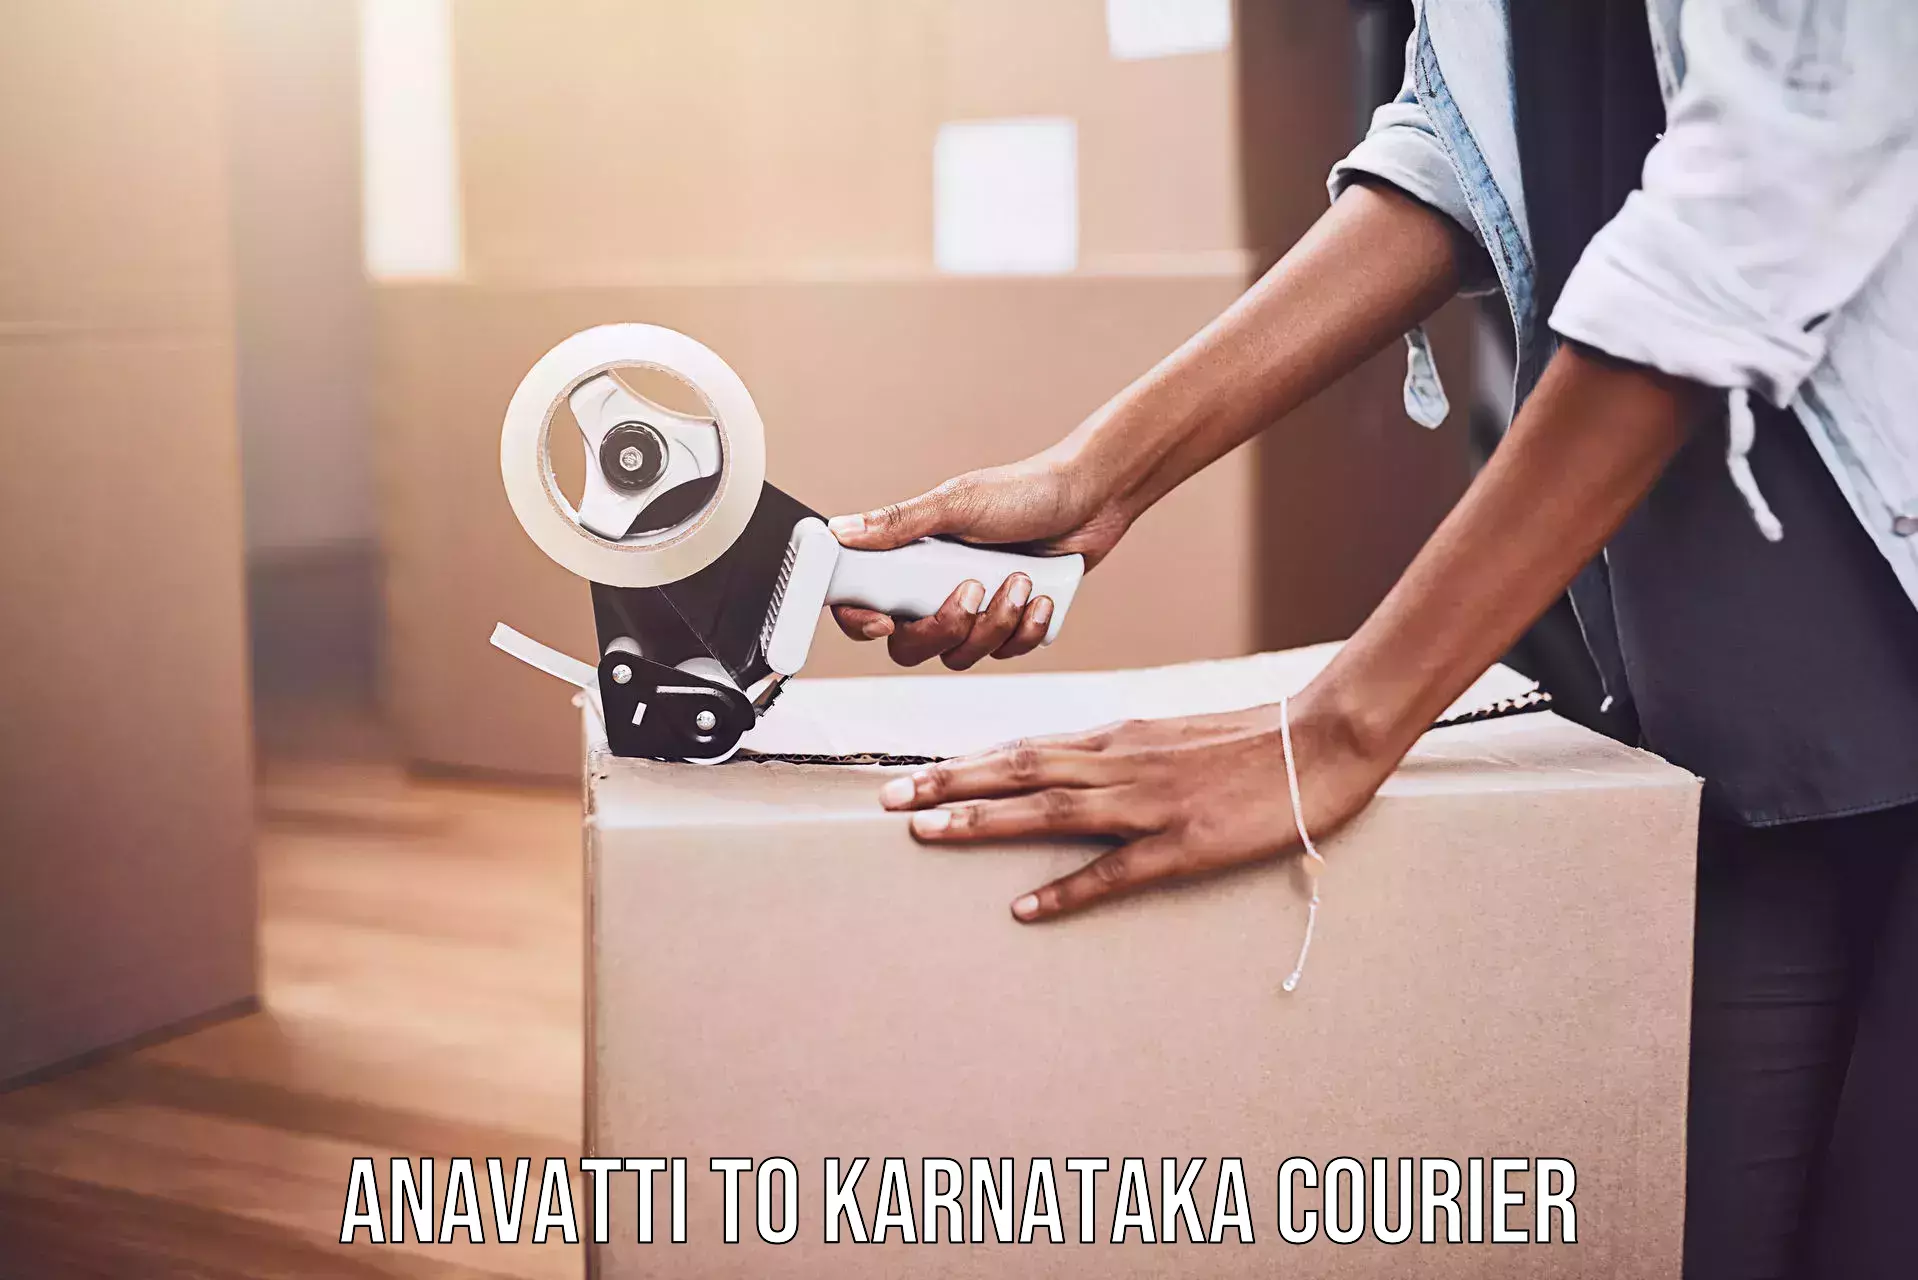 Express logistics service Anavatti to Karnataka